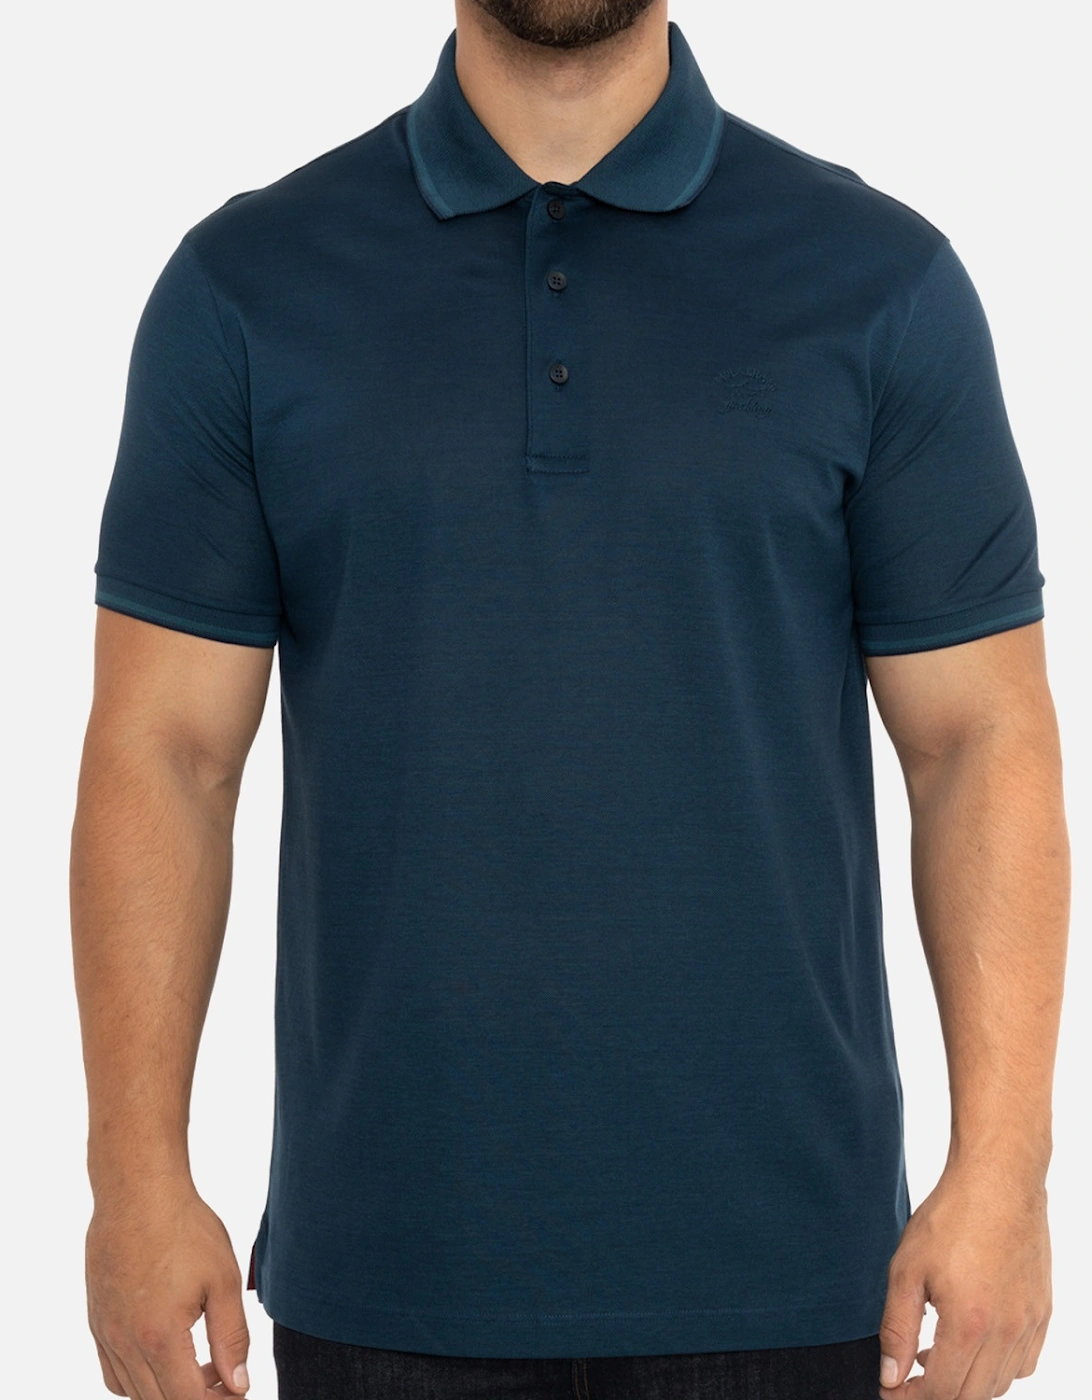 Mens 3-1 Kompact Tech Polo Shirt (Dark Turquoise), 8 of 7